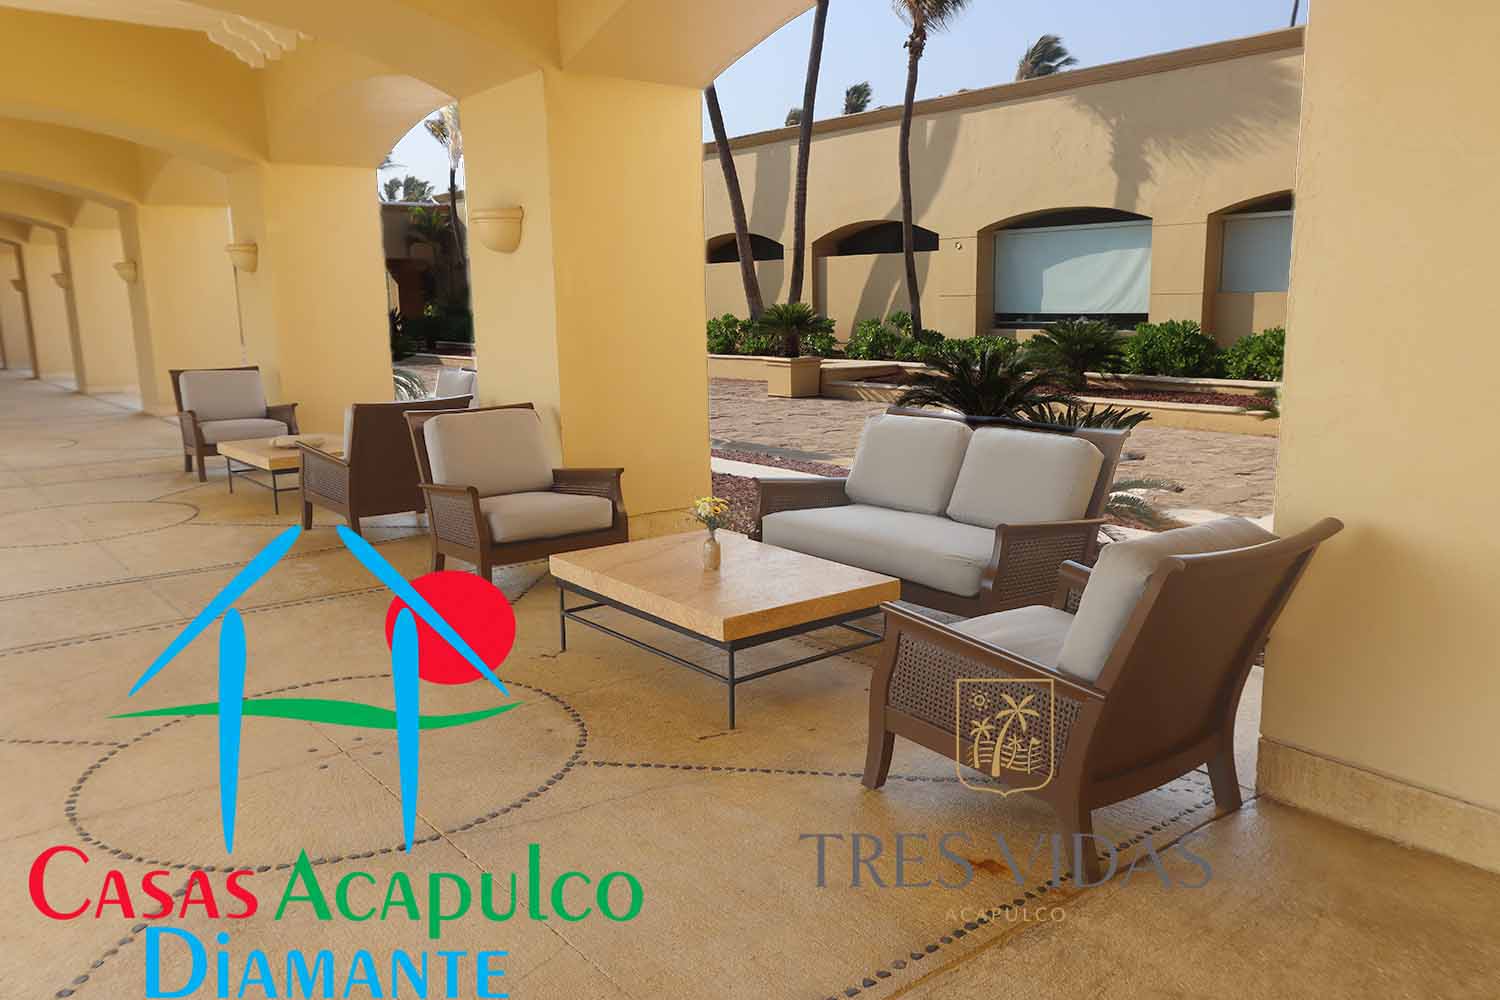 Tres Vidas Acapulco - Casa Club